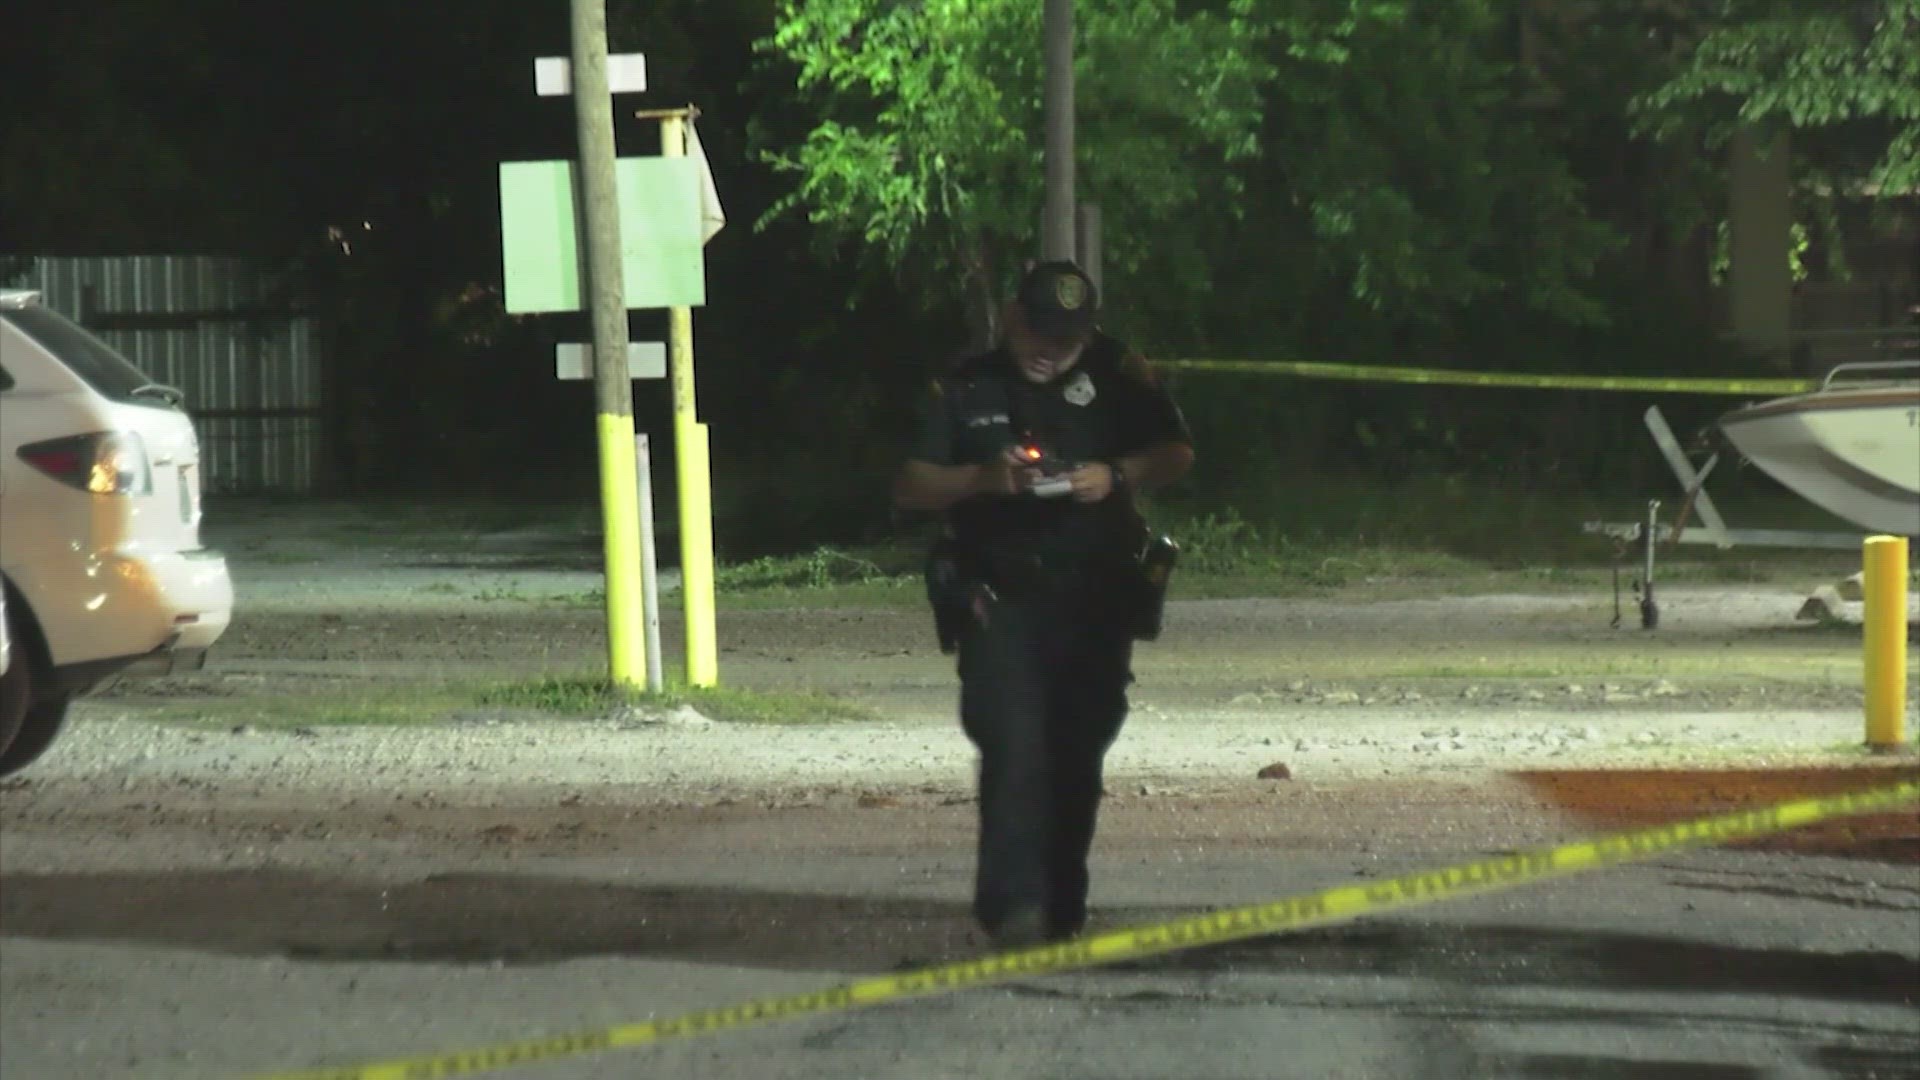 The body was found near Fulton and Halpern around 9:30 p.m. Tuesday.